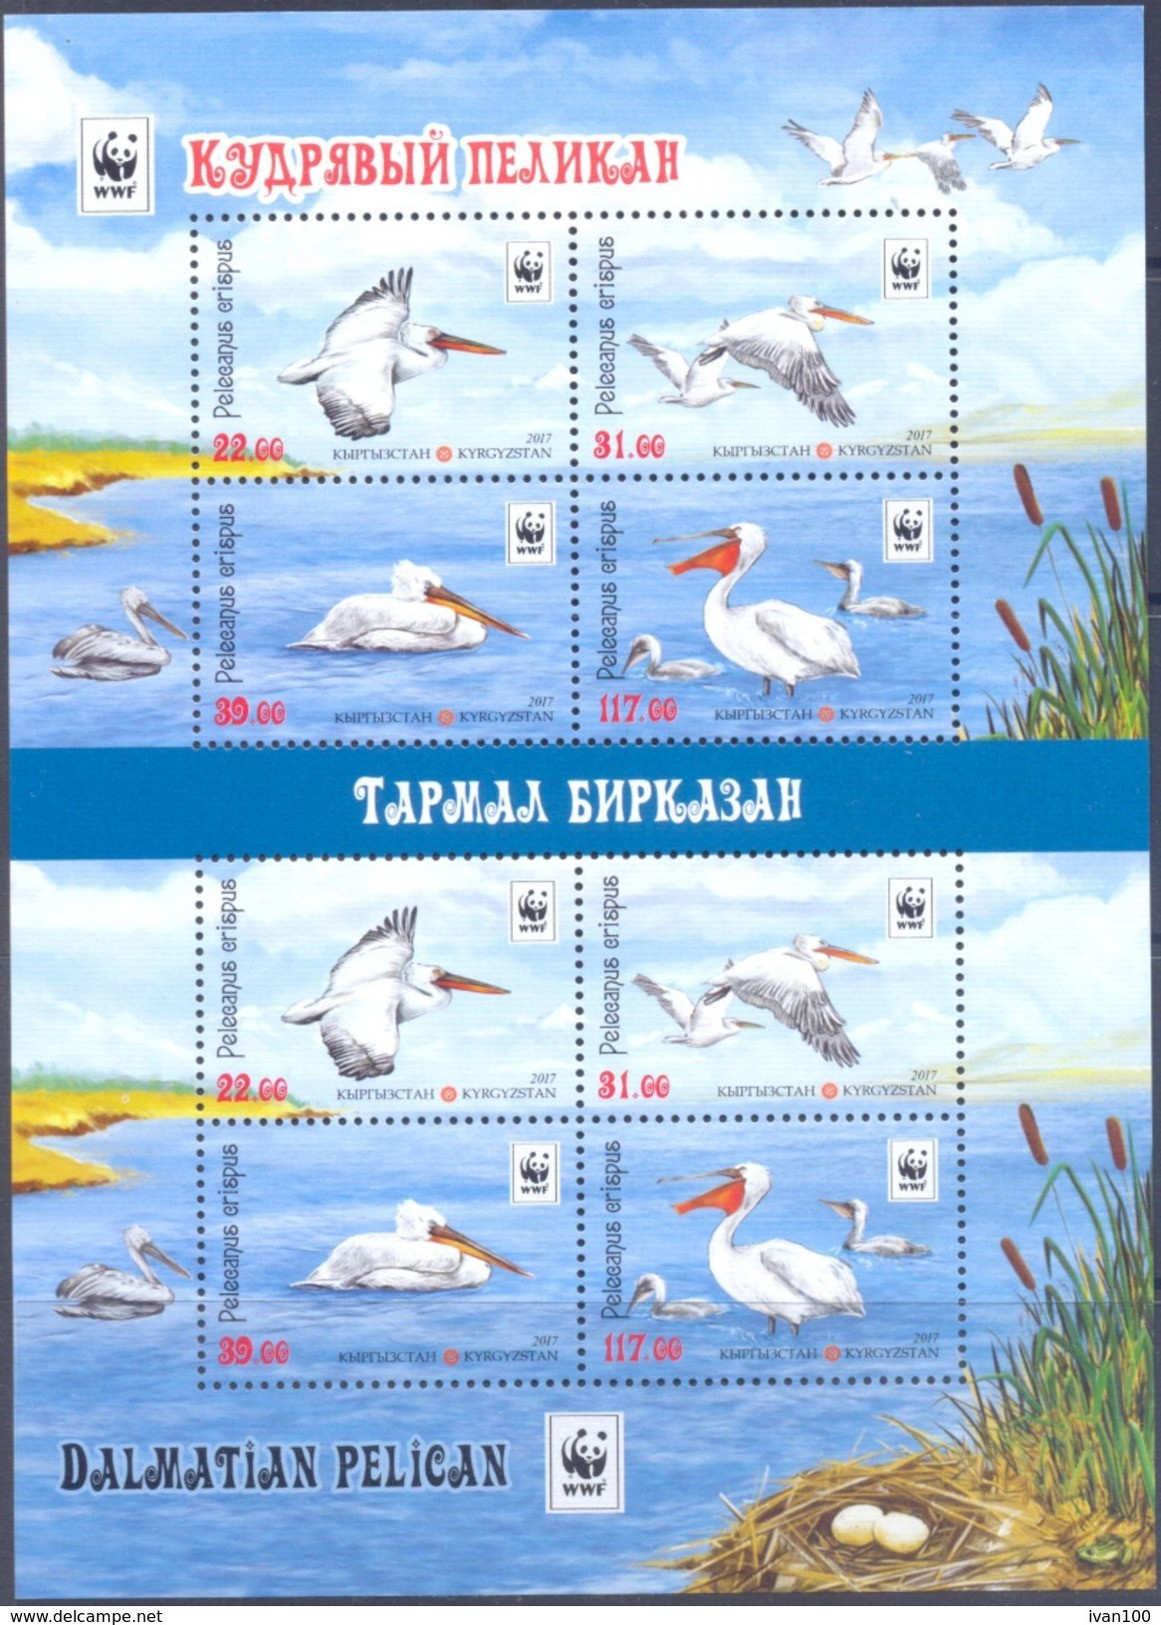 2017. Kyrgyzstan, WWF, Birds, Dalmatian Pelican, Sheetlet Perforated, Mint/ ** - Kirghizstan